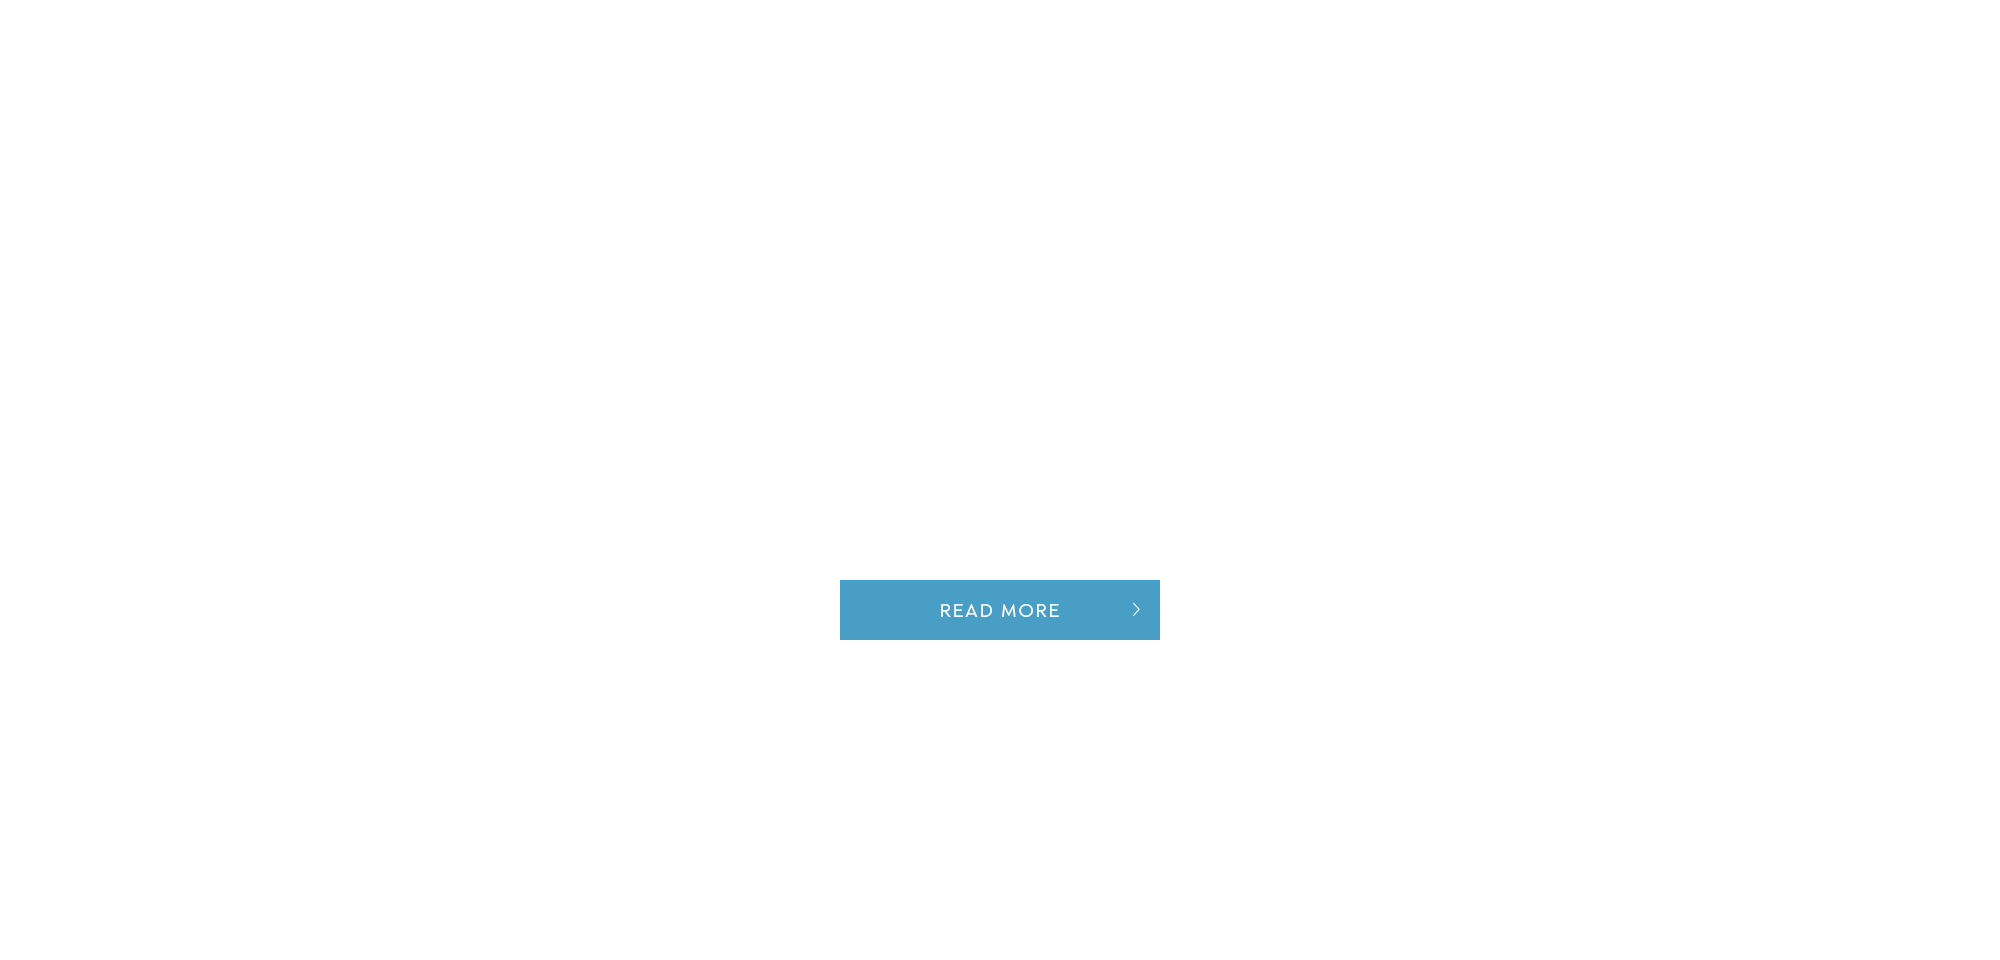 bnr_business_off